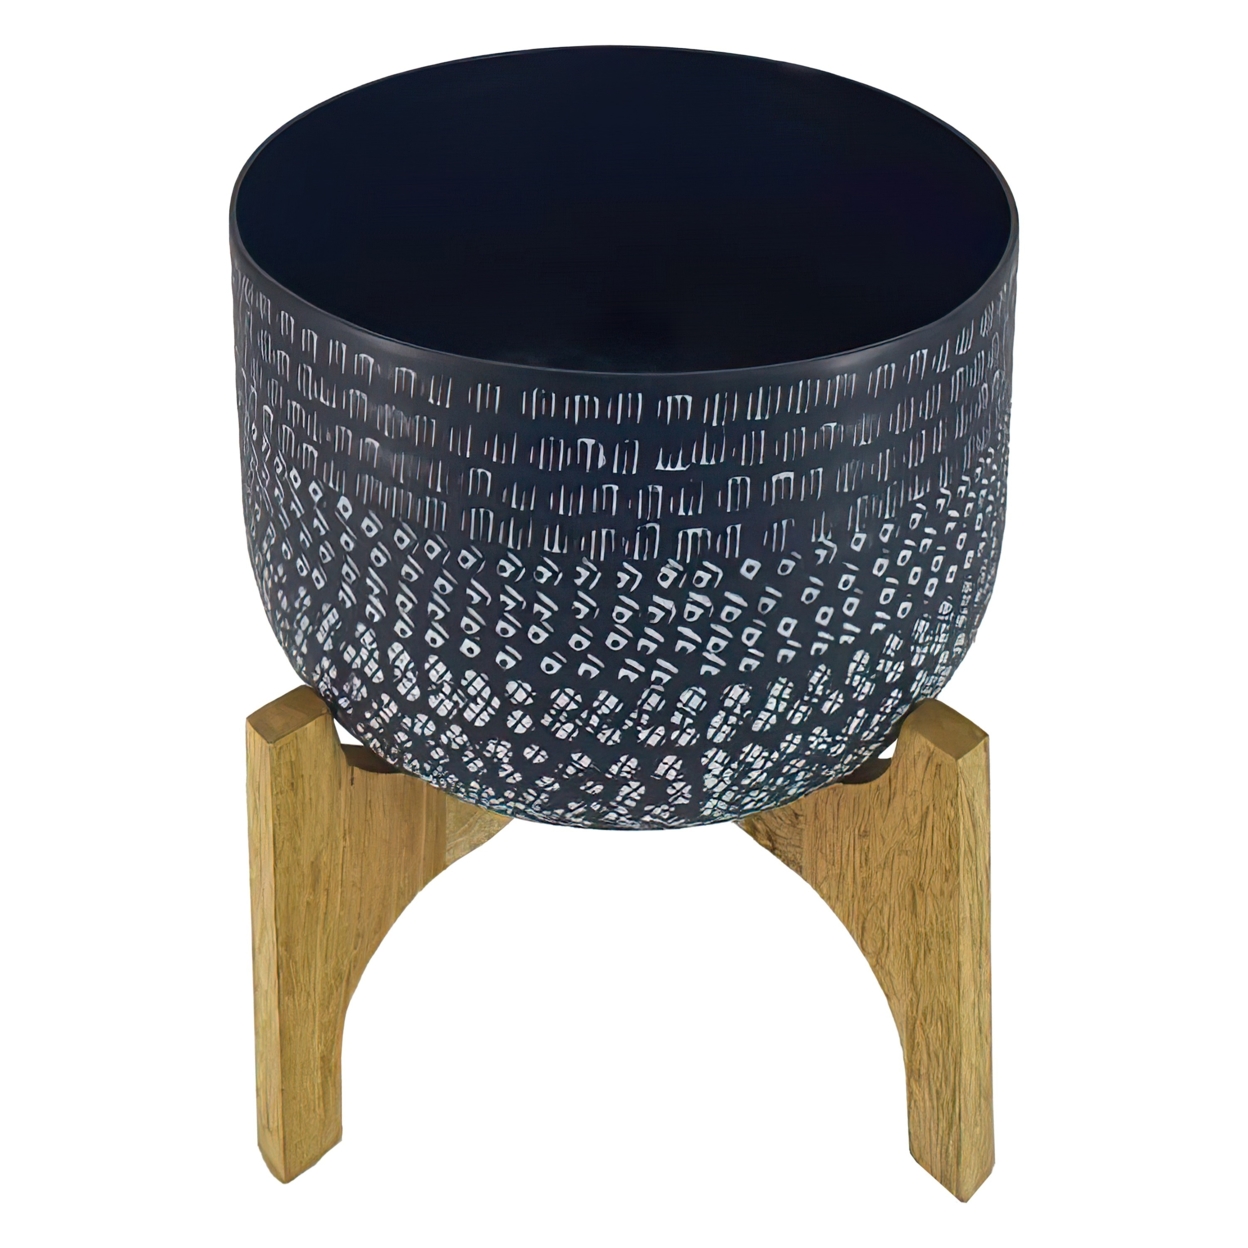 Alex 12 Inch Artisanal Industrial Round Hammered Metal Planter Pot With Wood Arch Stand, Midnight Blue- Saltoro Sherpi